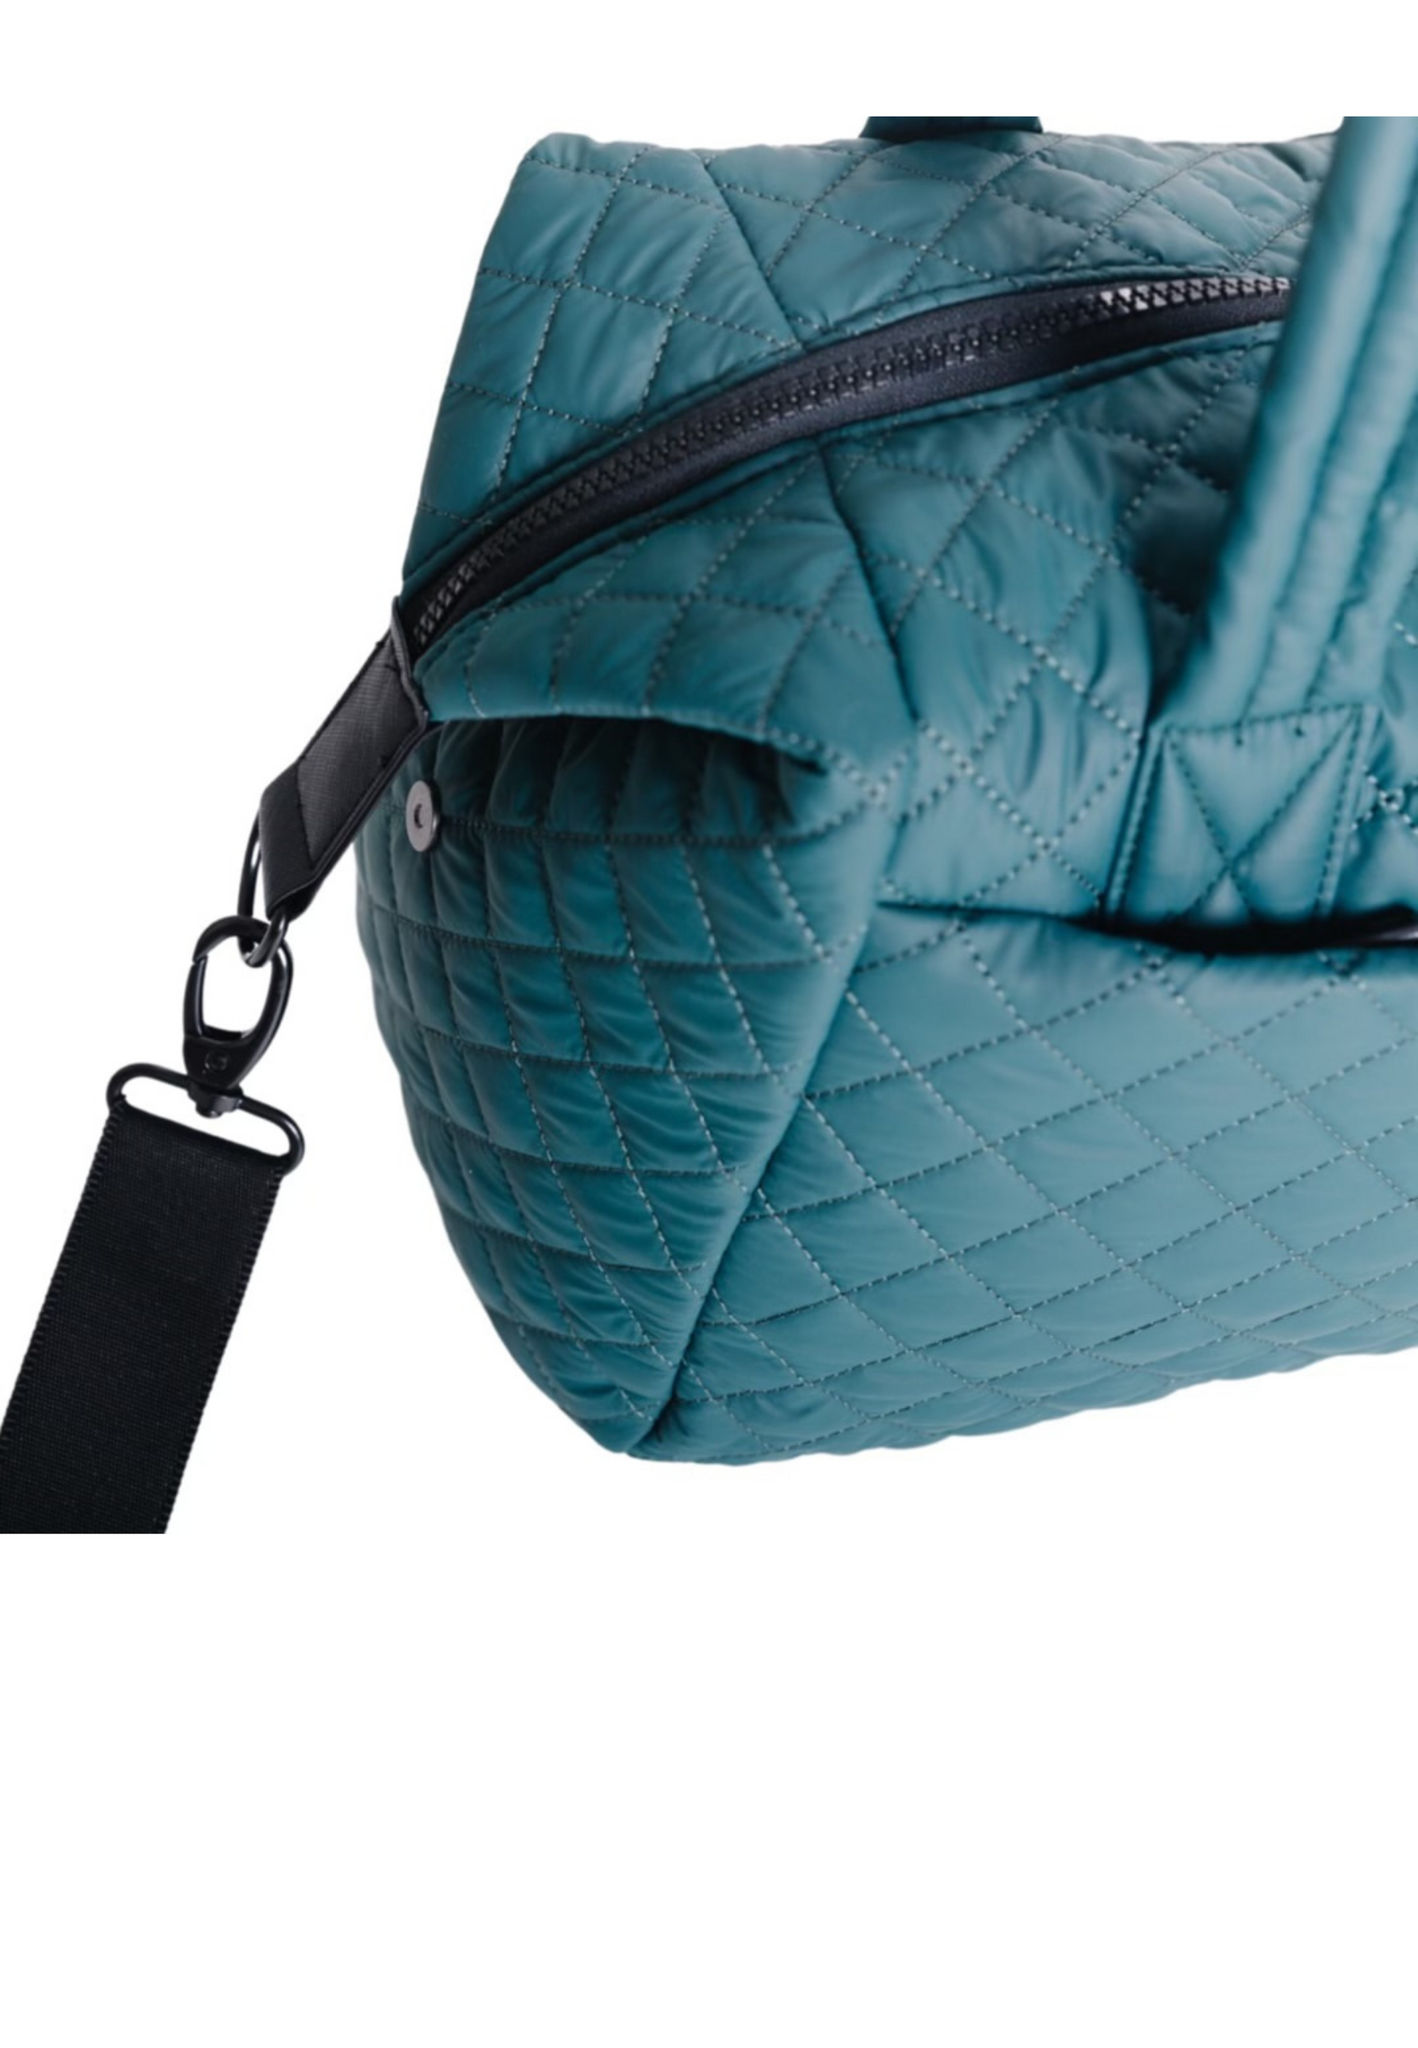 Vooray Alana Duffel - 25L - Travel Duffel & Gym Bag with Laptop Sleeve, Shoe Pocket & Dry pocket